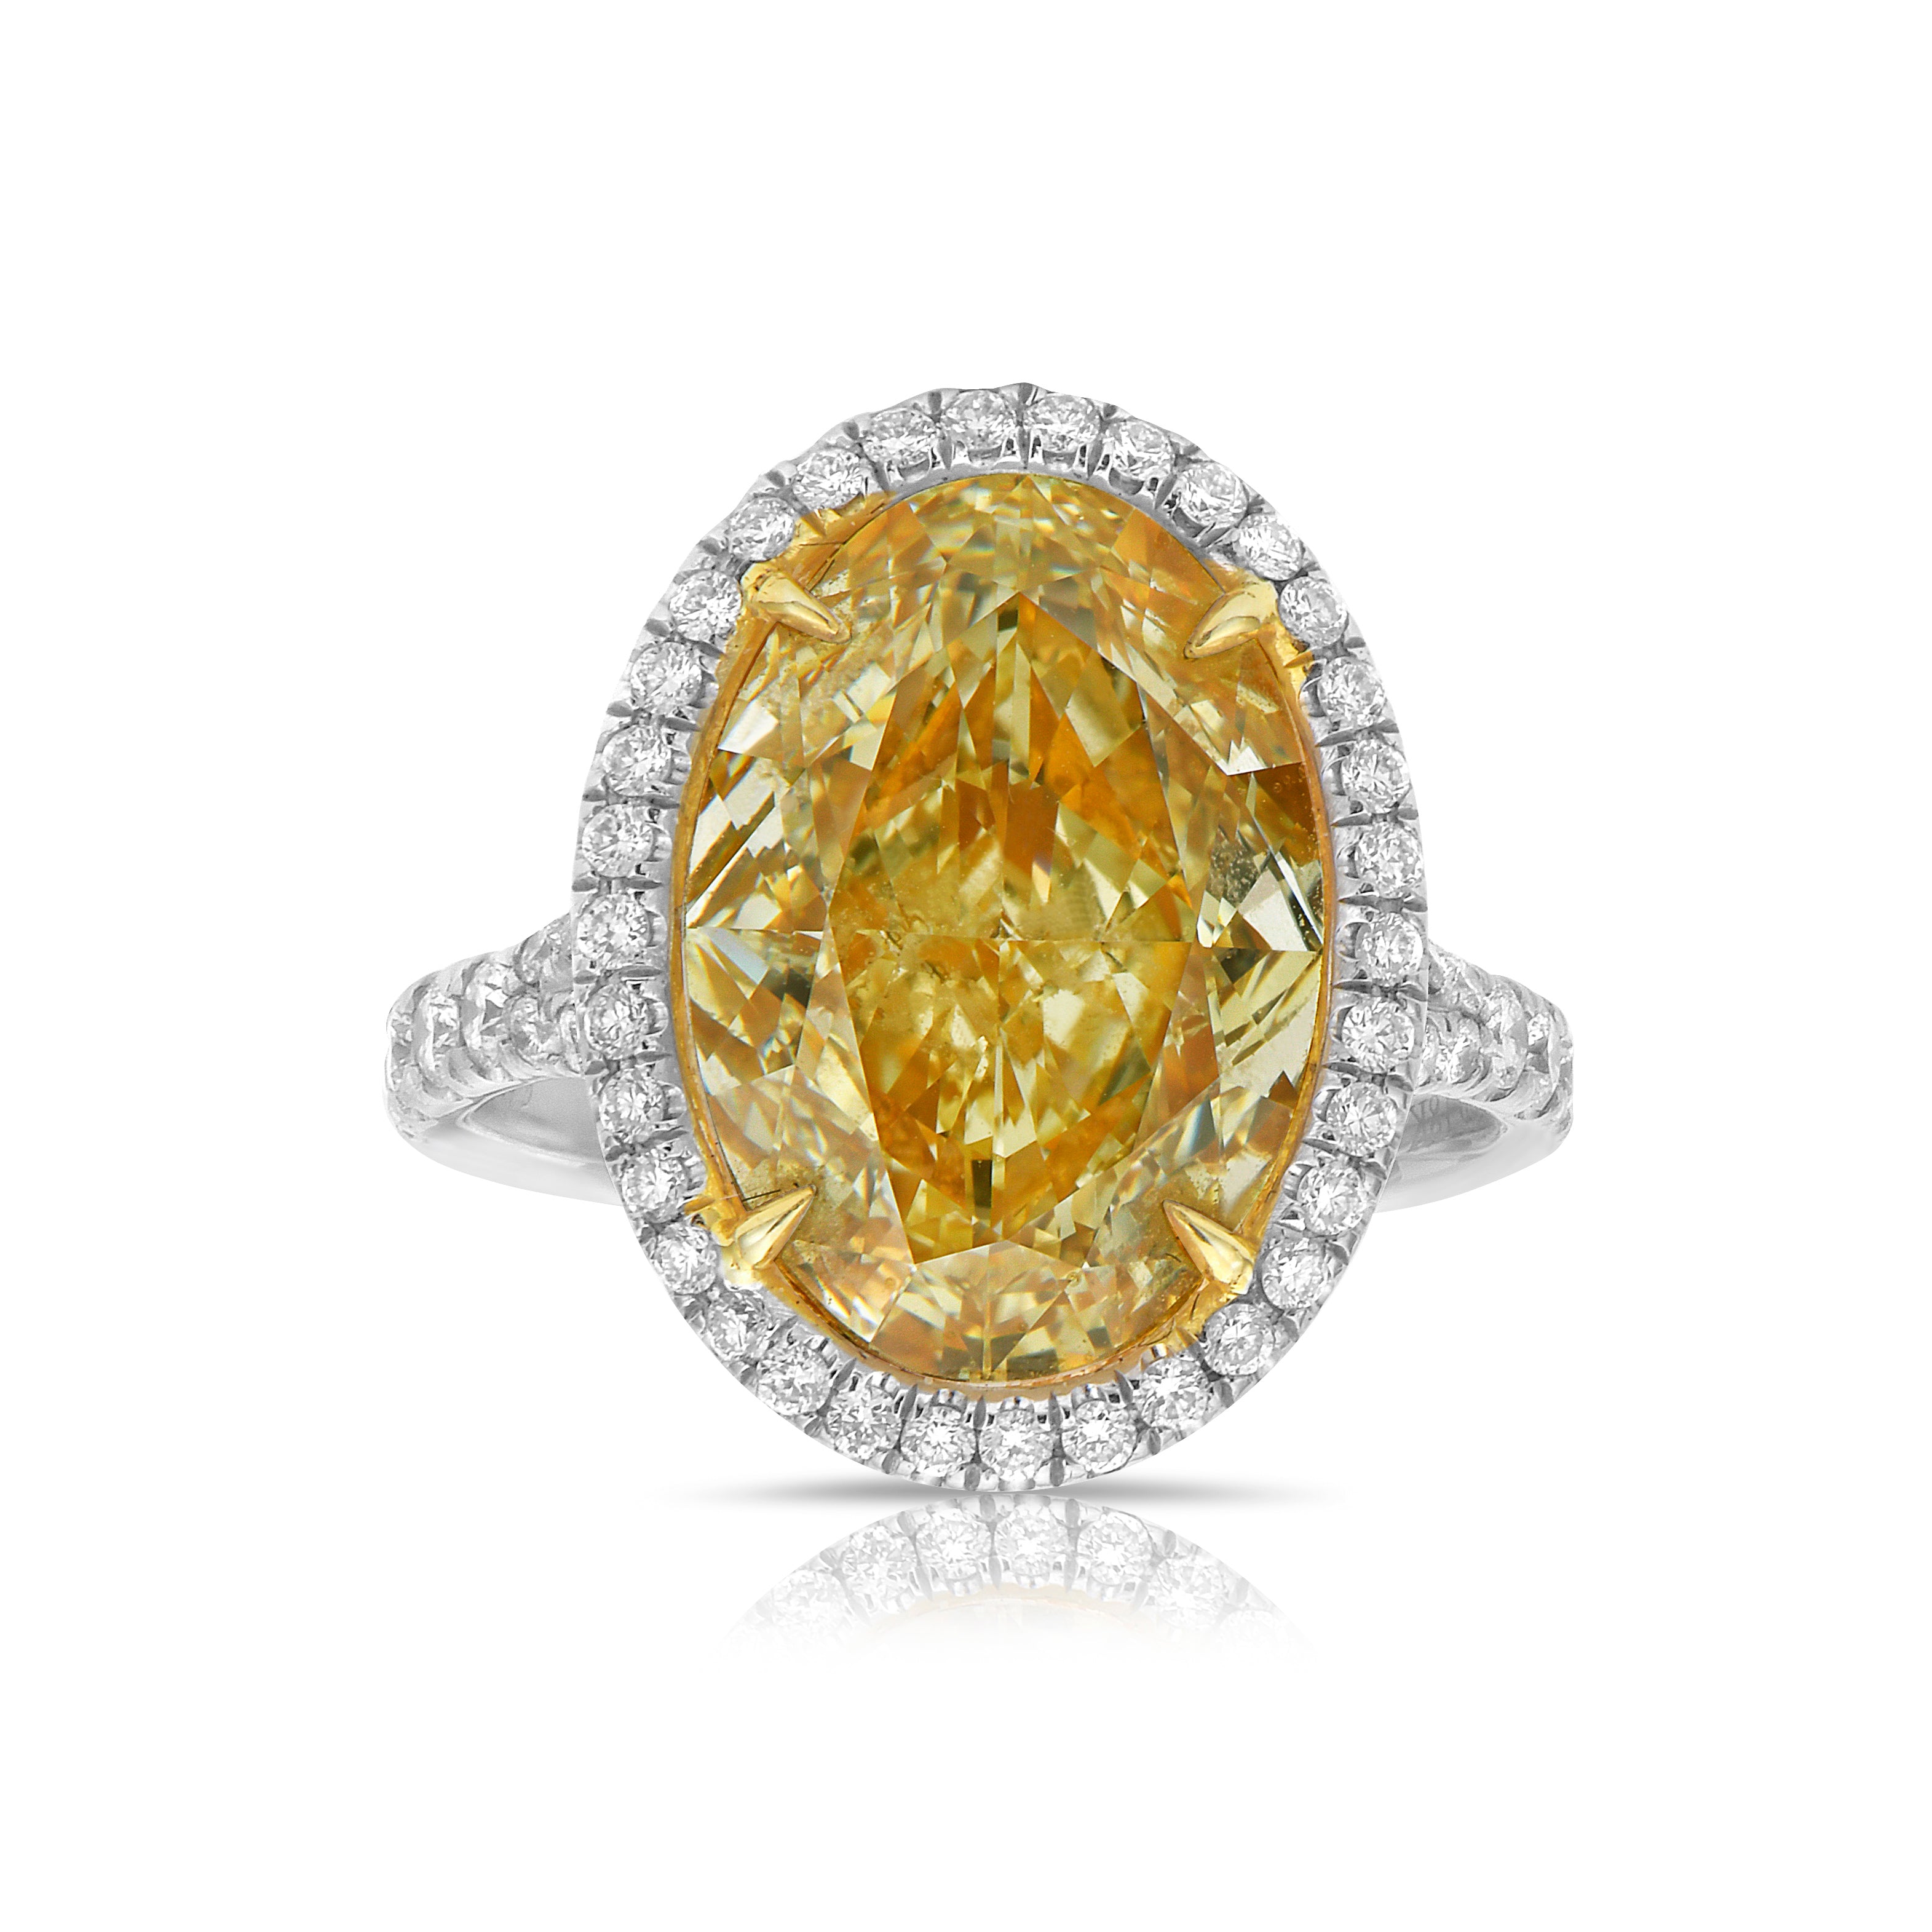 7.13ct GIA Light Yellow Diamond Ring